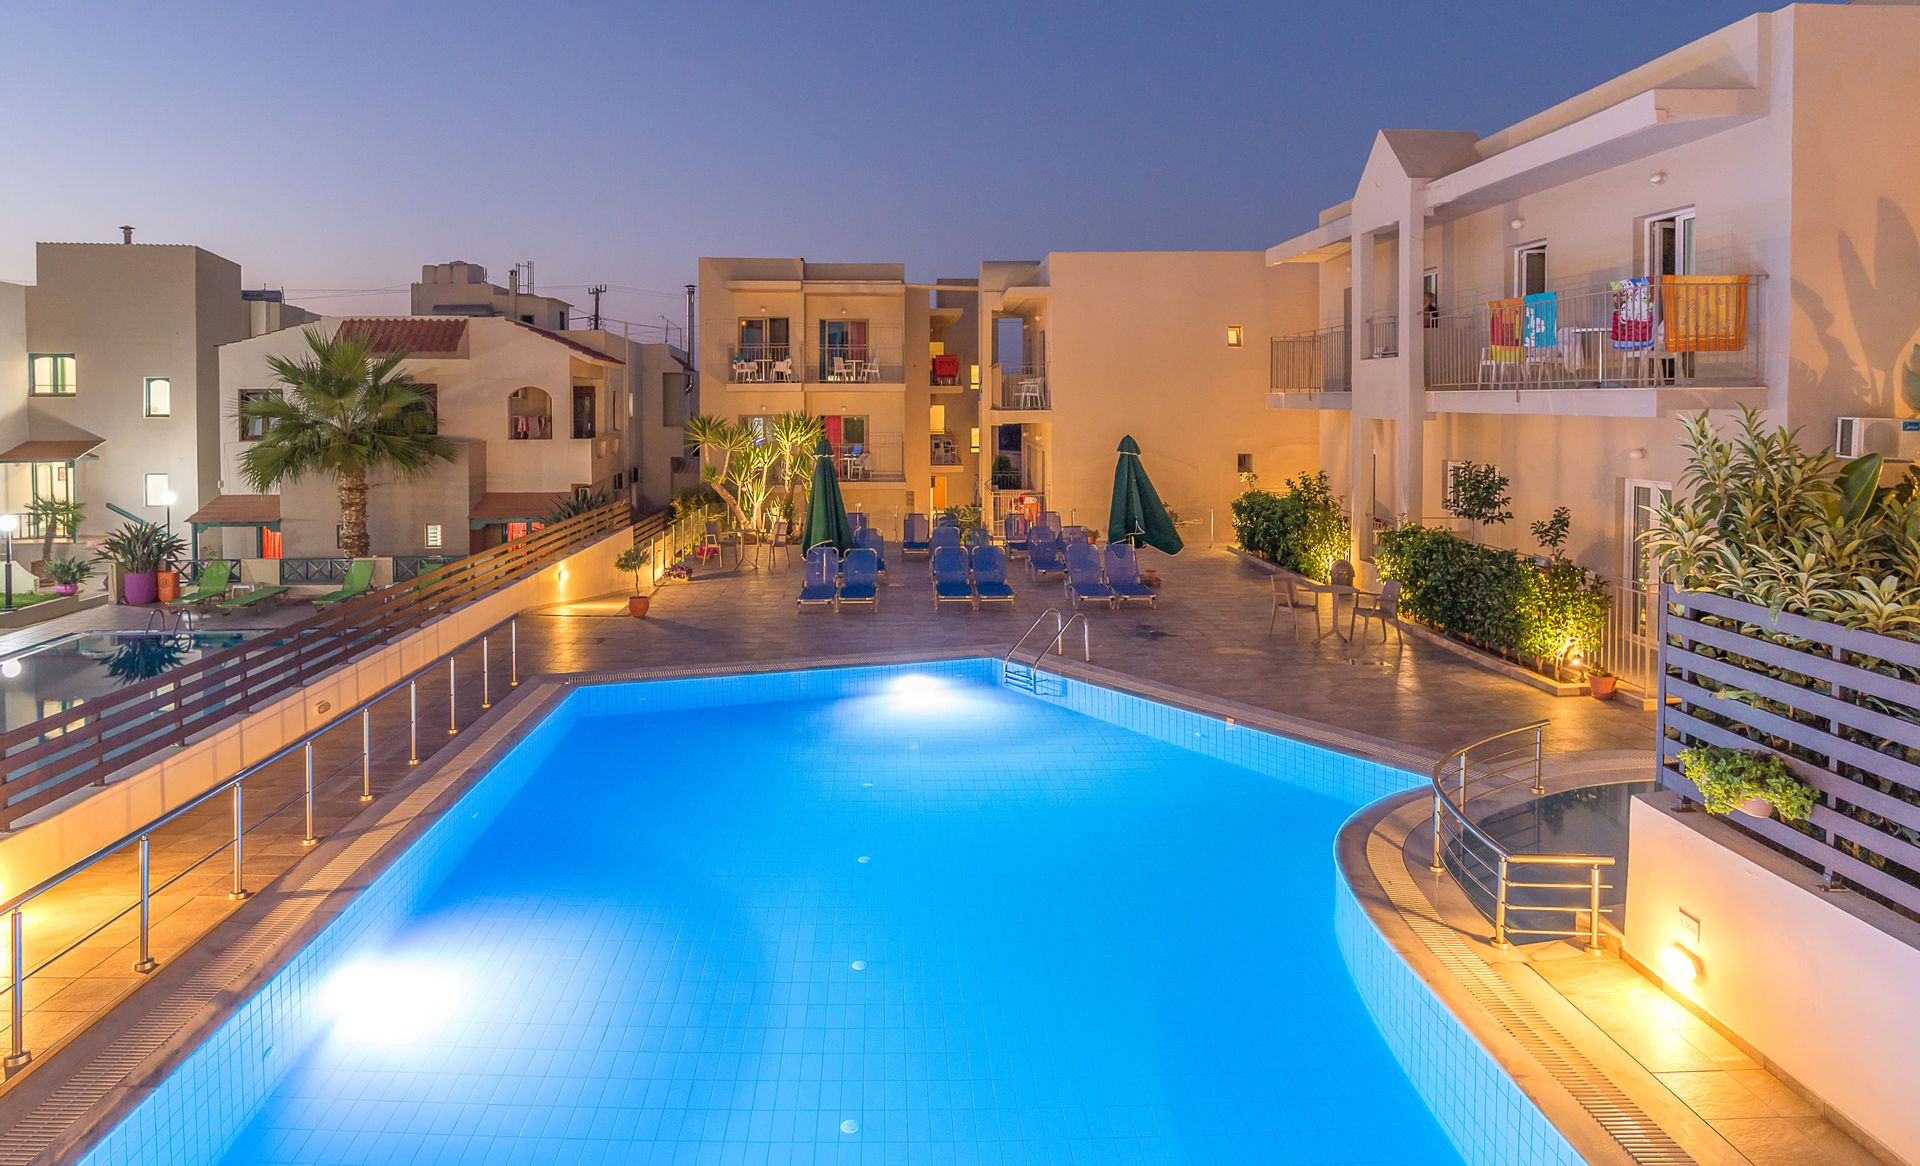 Creta Verano Hotel - Μάλια, Κρήτη ✦ 2 Ημέρες (1 Διανυκτέρευση)